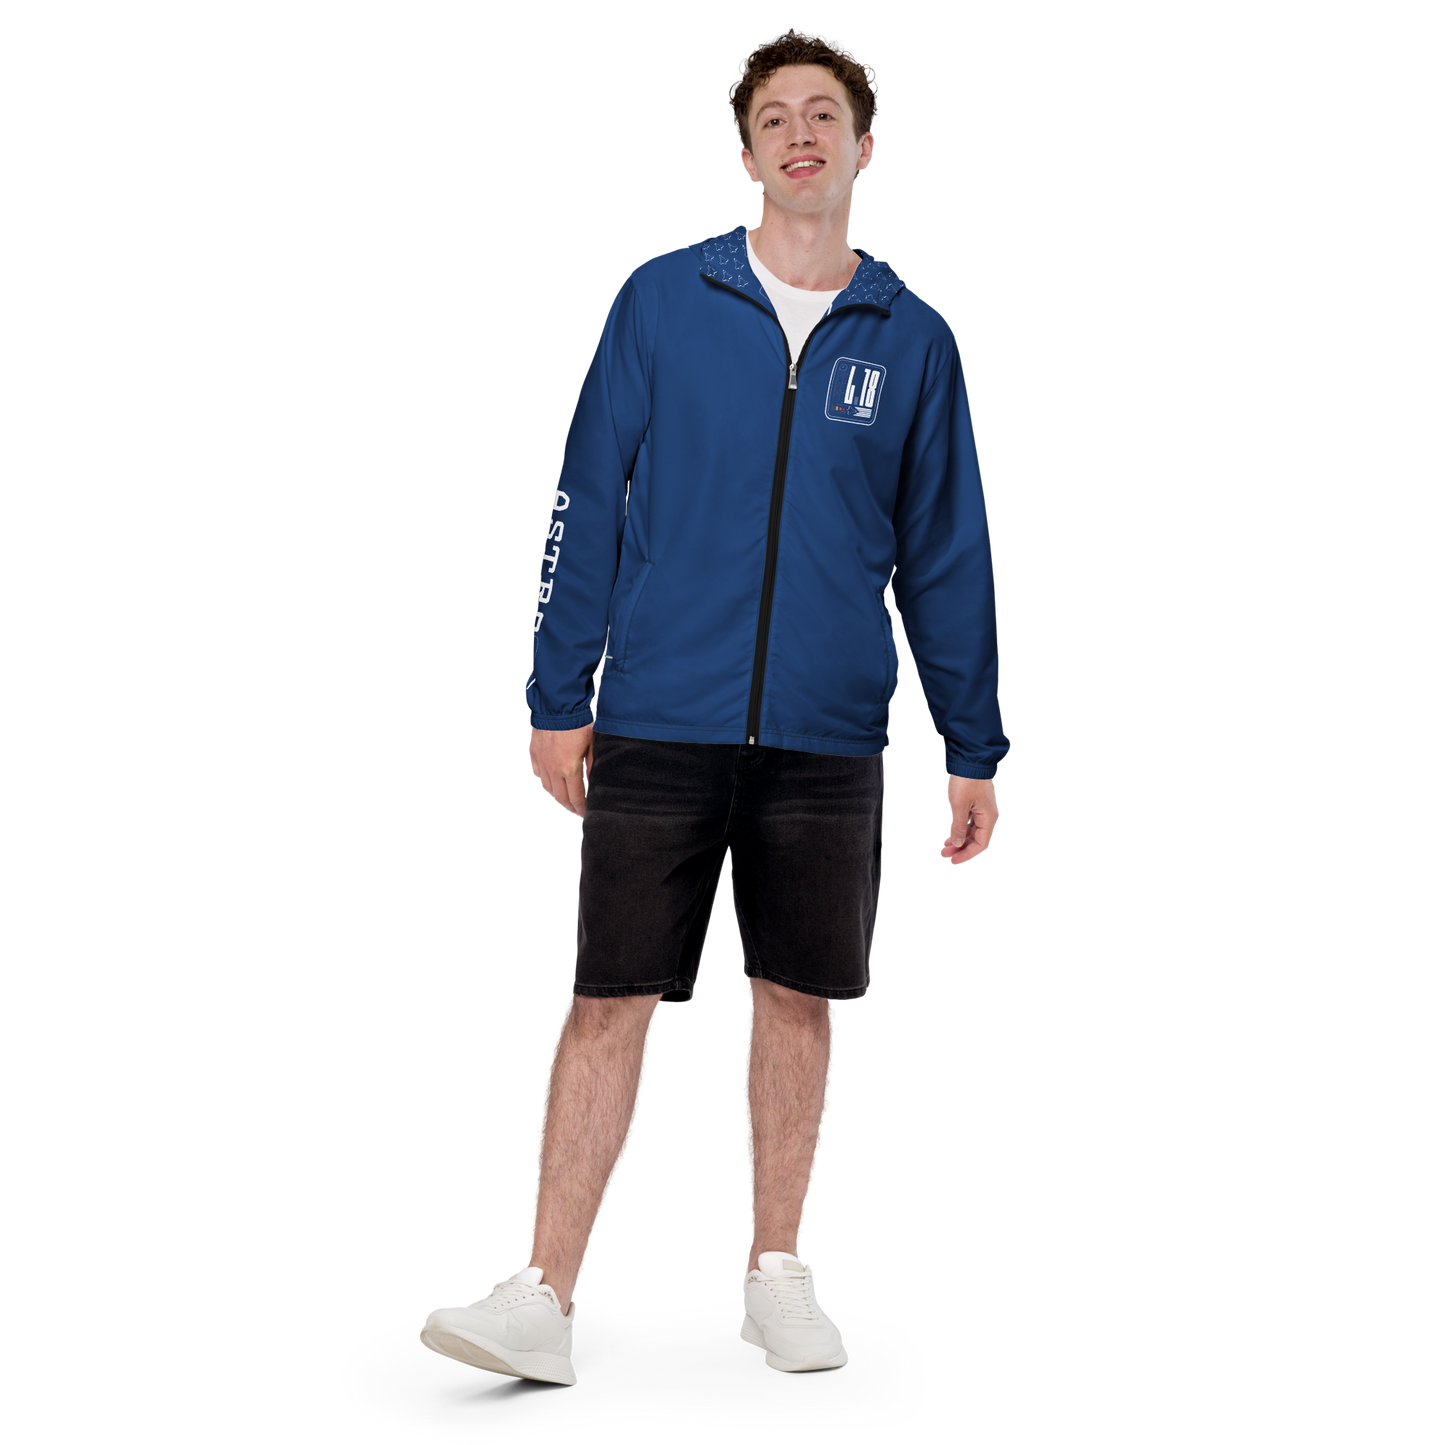 YSUG Astro - Windbreaker Jacket (Blue)